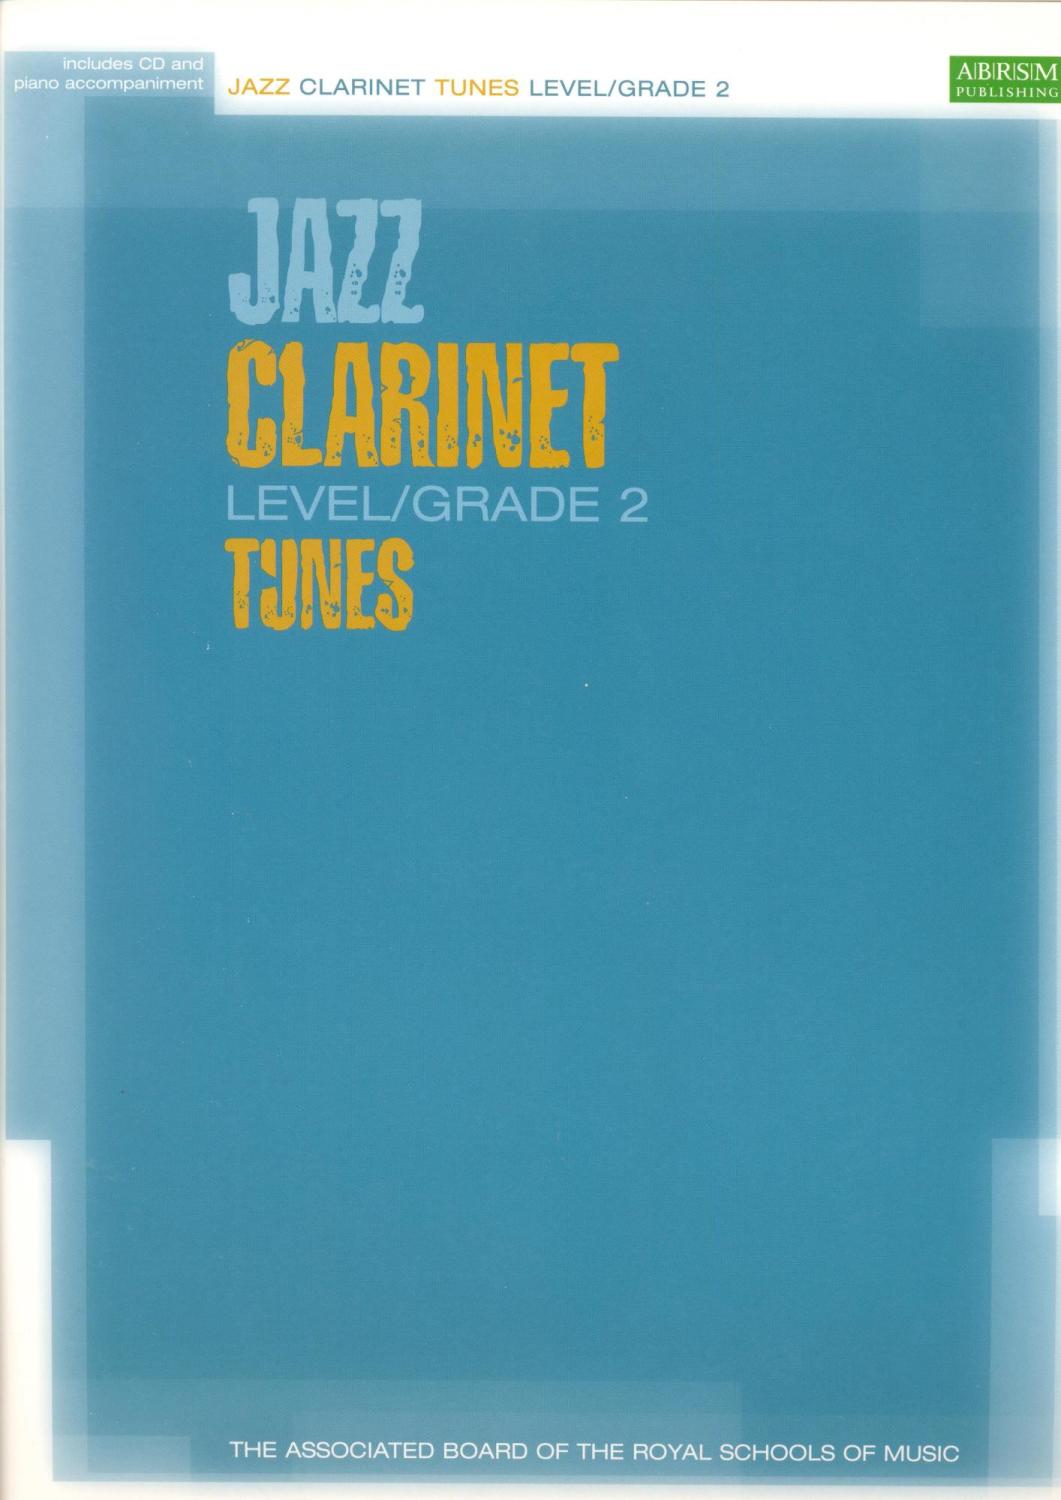 ABRSM JAZZ CLARINET TUNES LEVEL/GRADE 2 (BOOK/CD) CLT